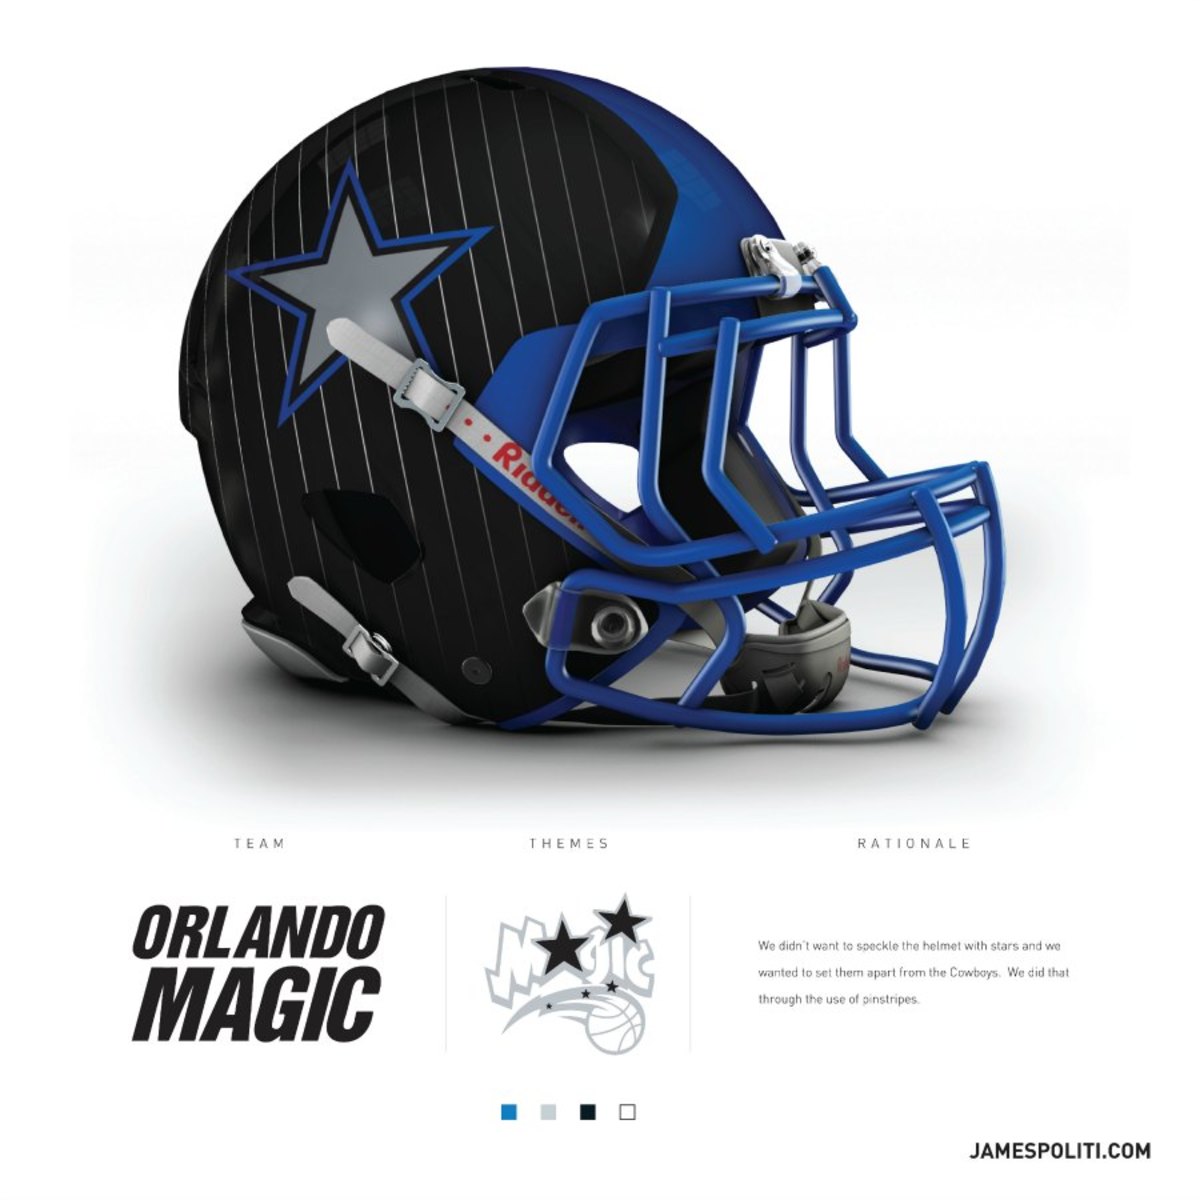 Orlando-Magic-nba-helmet.jpg